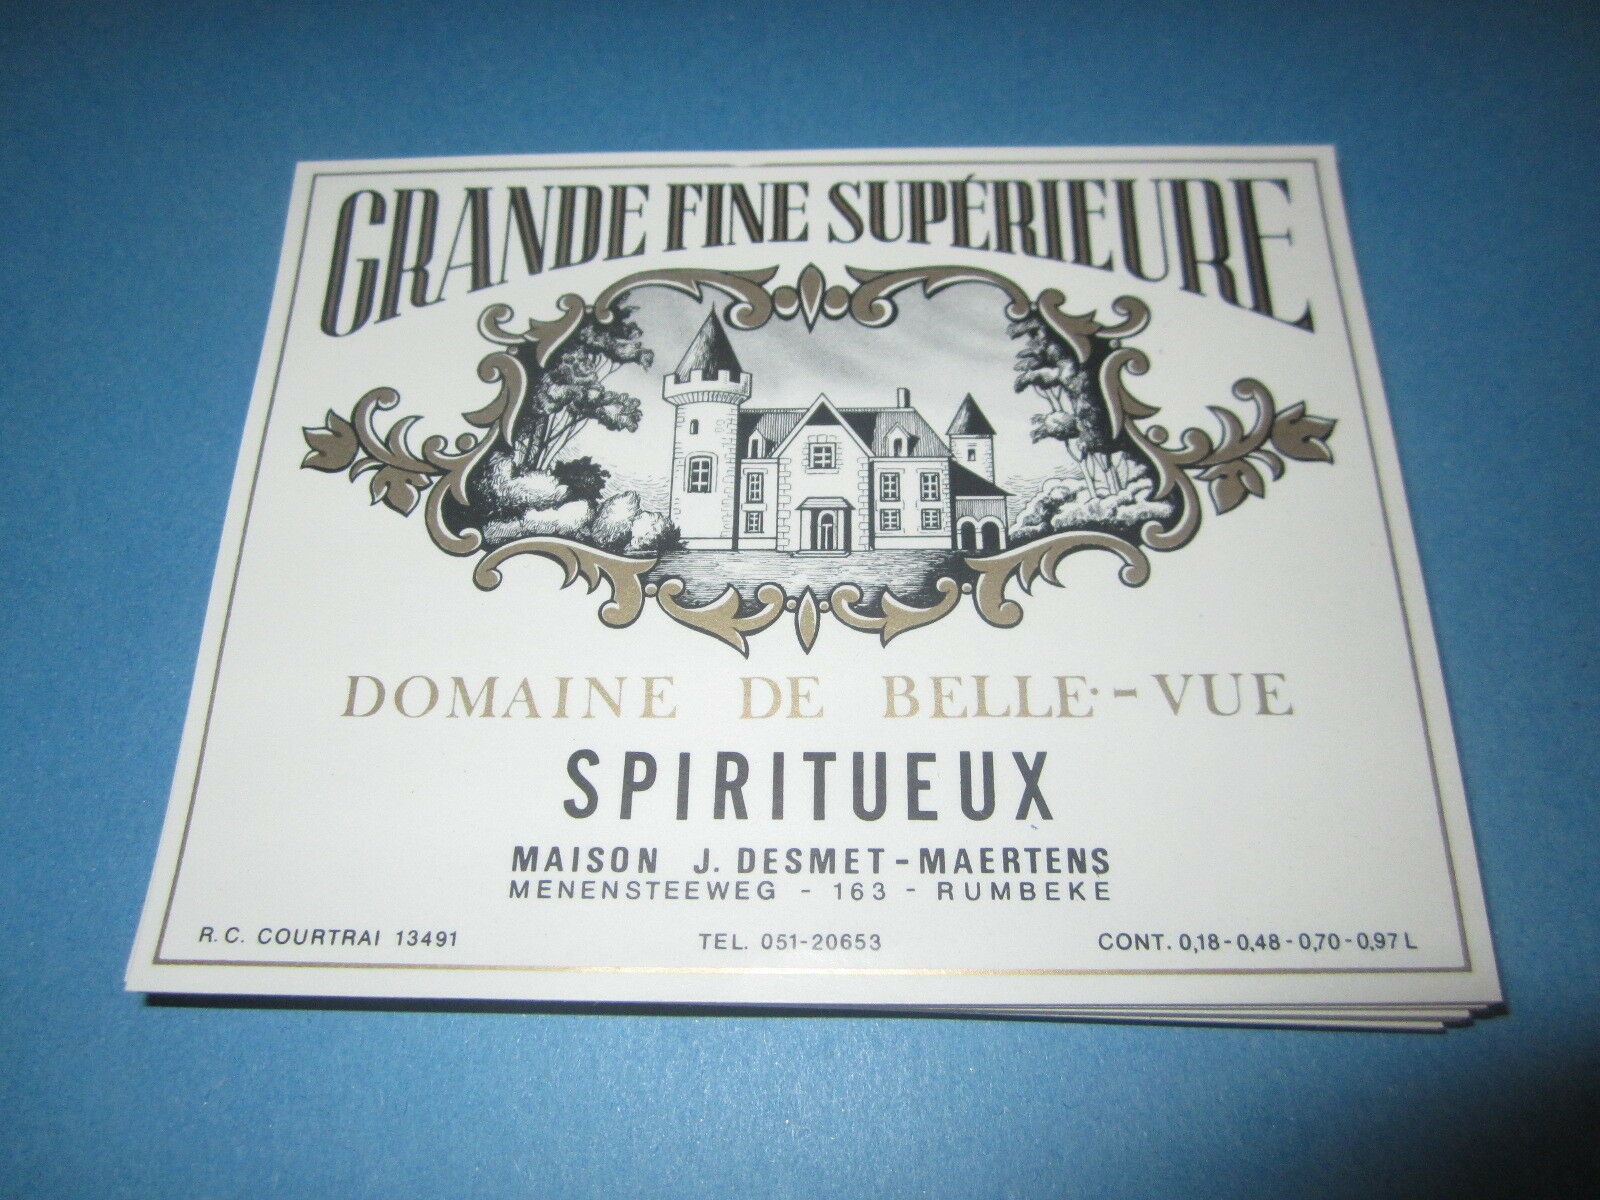  Lot of 100 Old Vintage - Domaine De Belle Vue ...